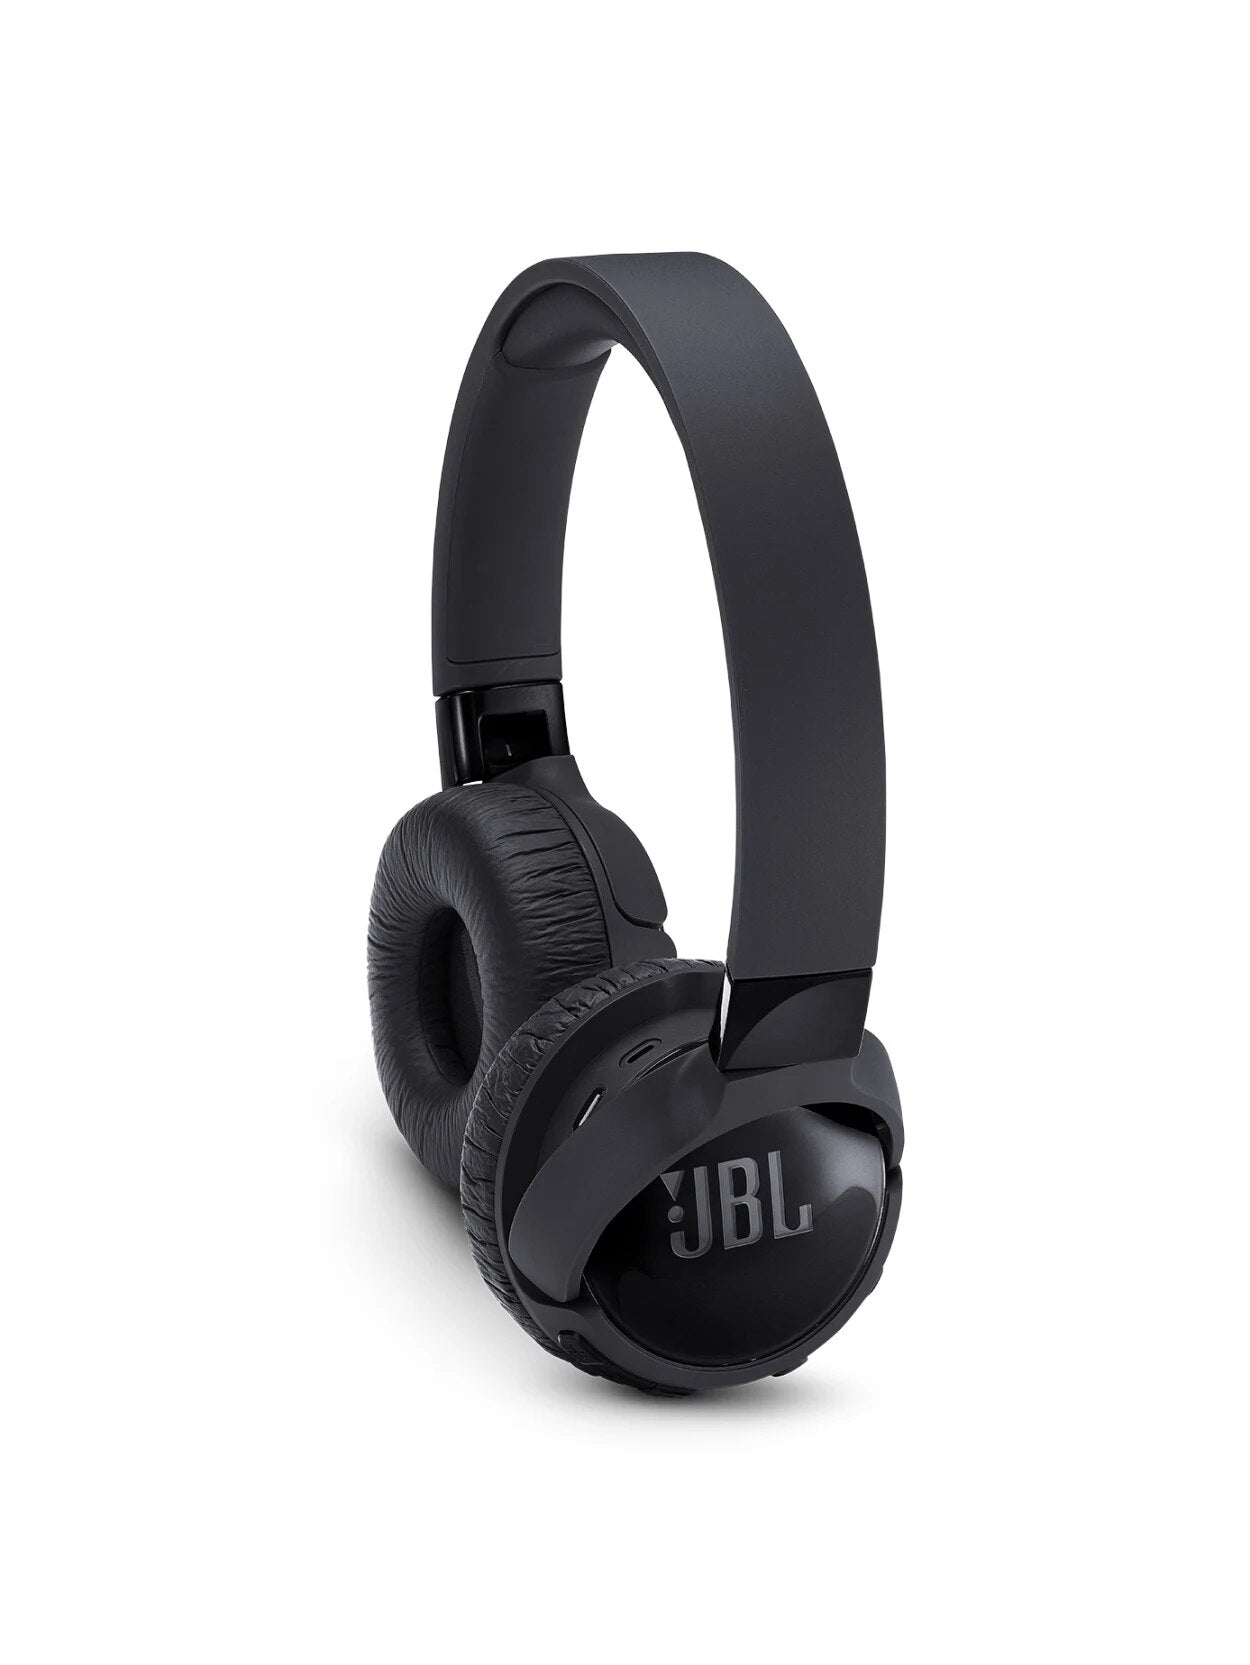 JBL HEADPHONE JBL T600 BT ON-EAR NOISE-CANCELLING BLACK